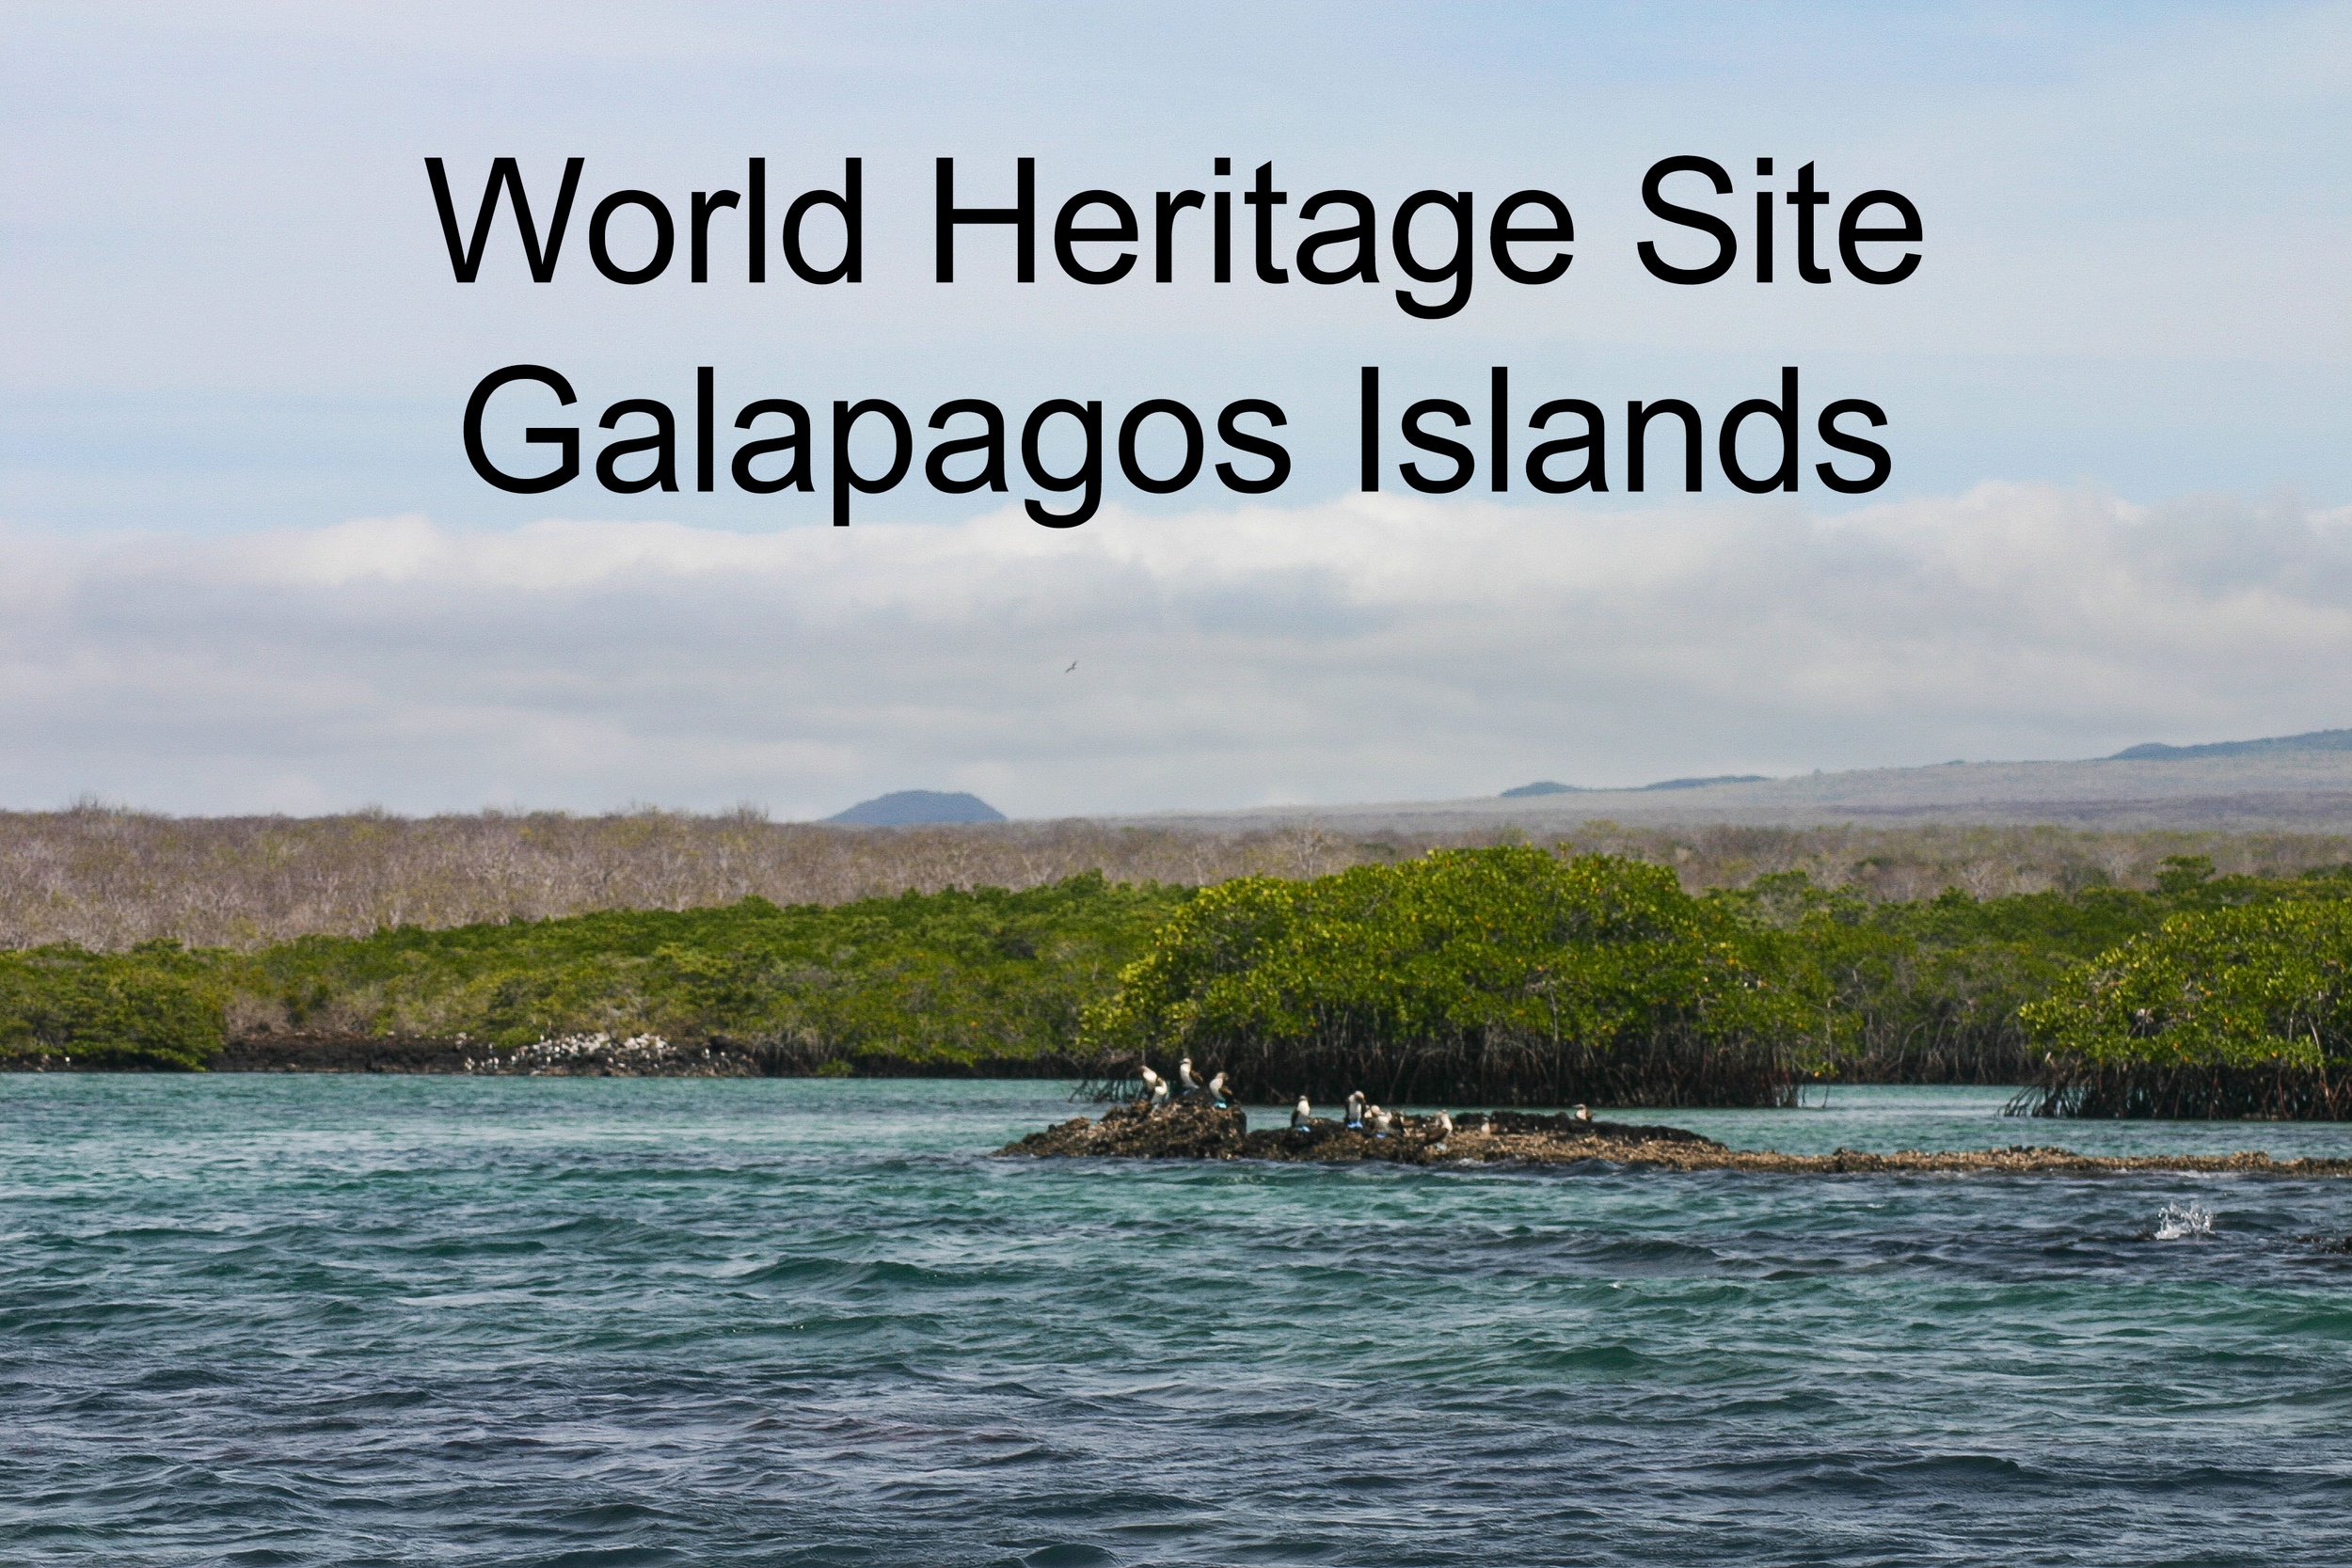 World Heritage Site Galapagos Islands.